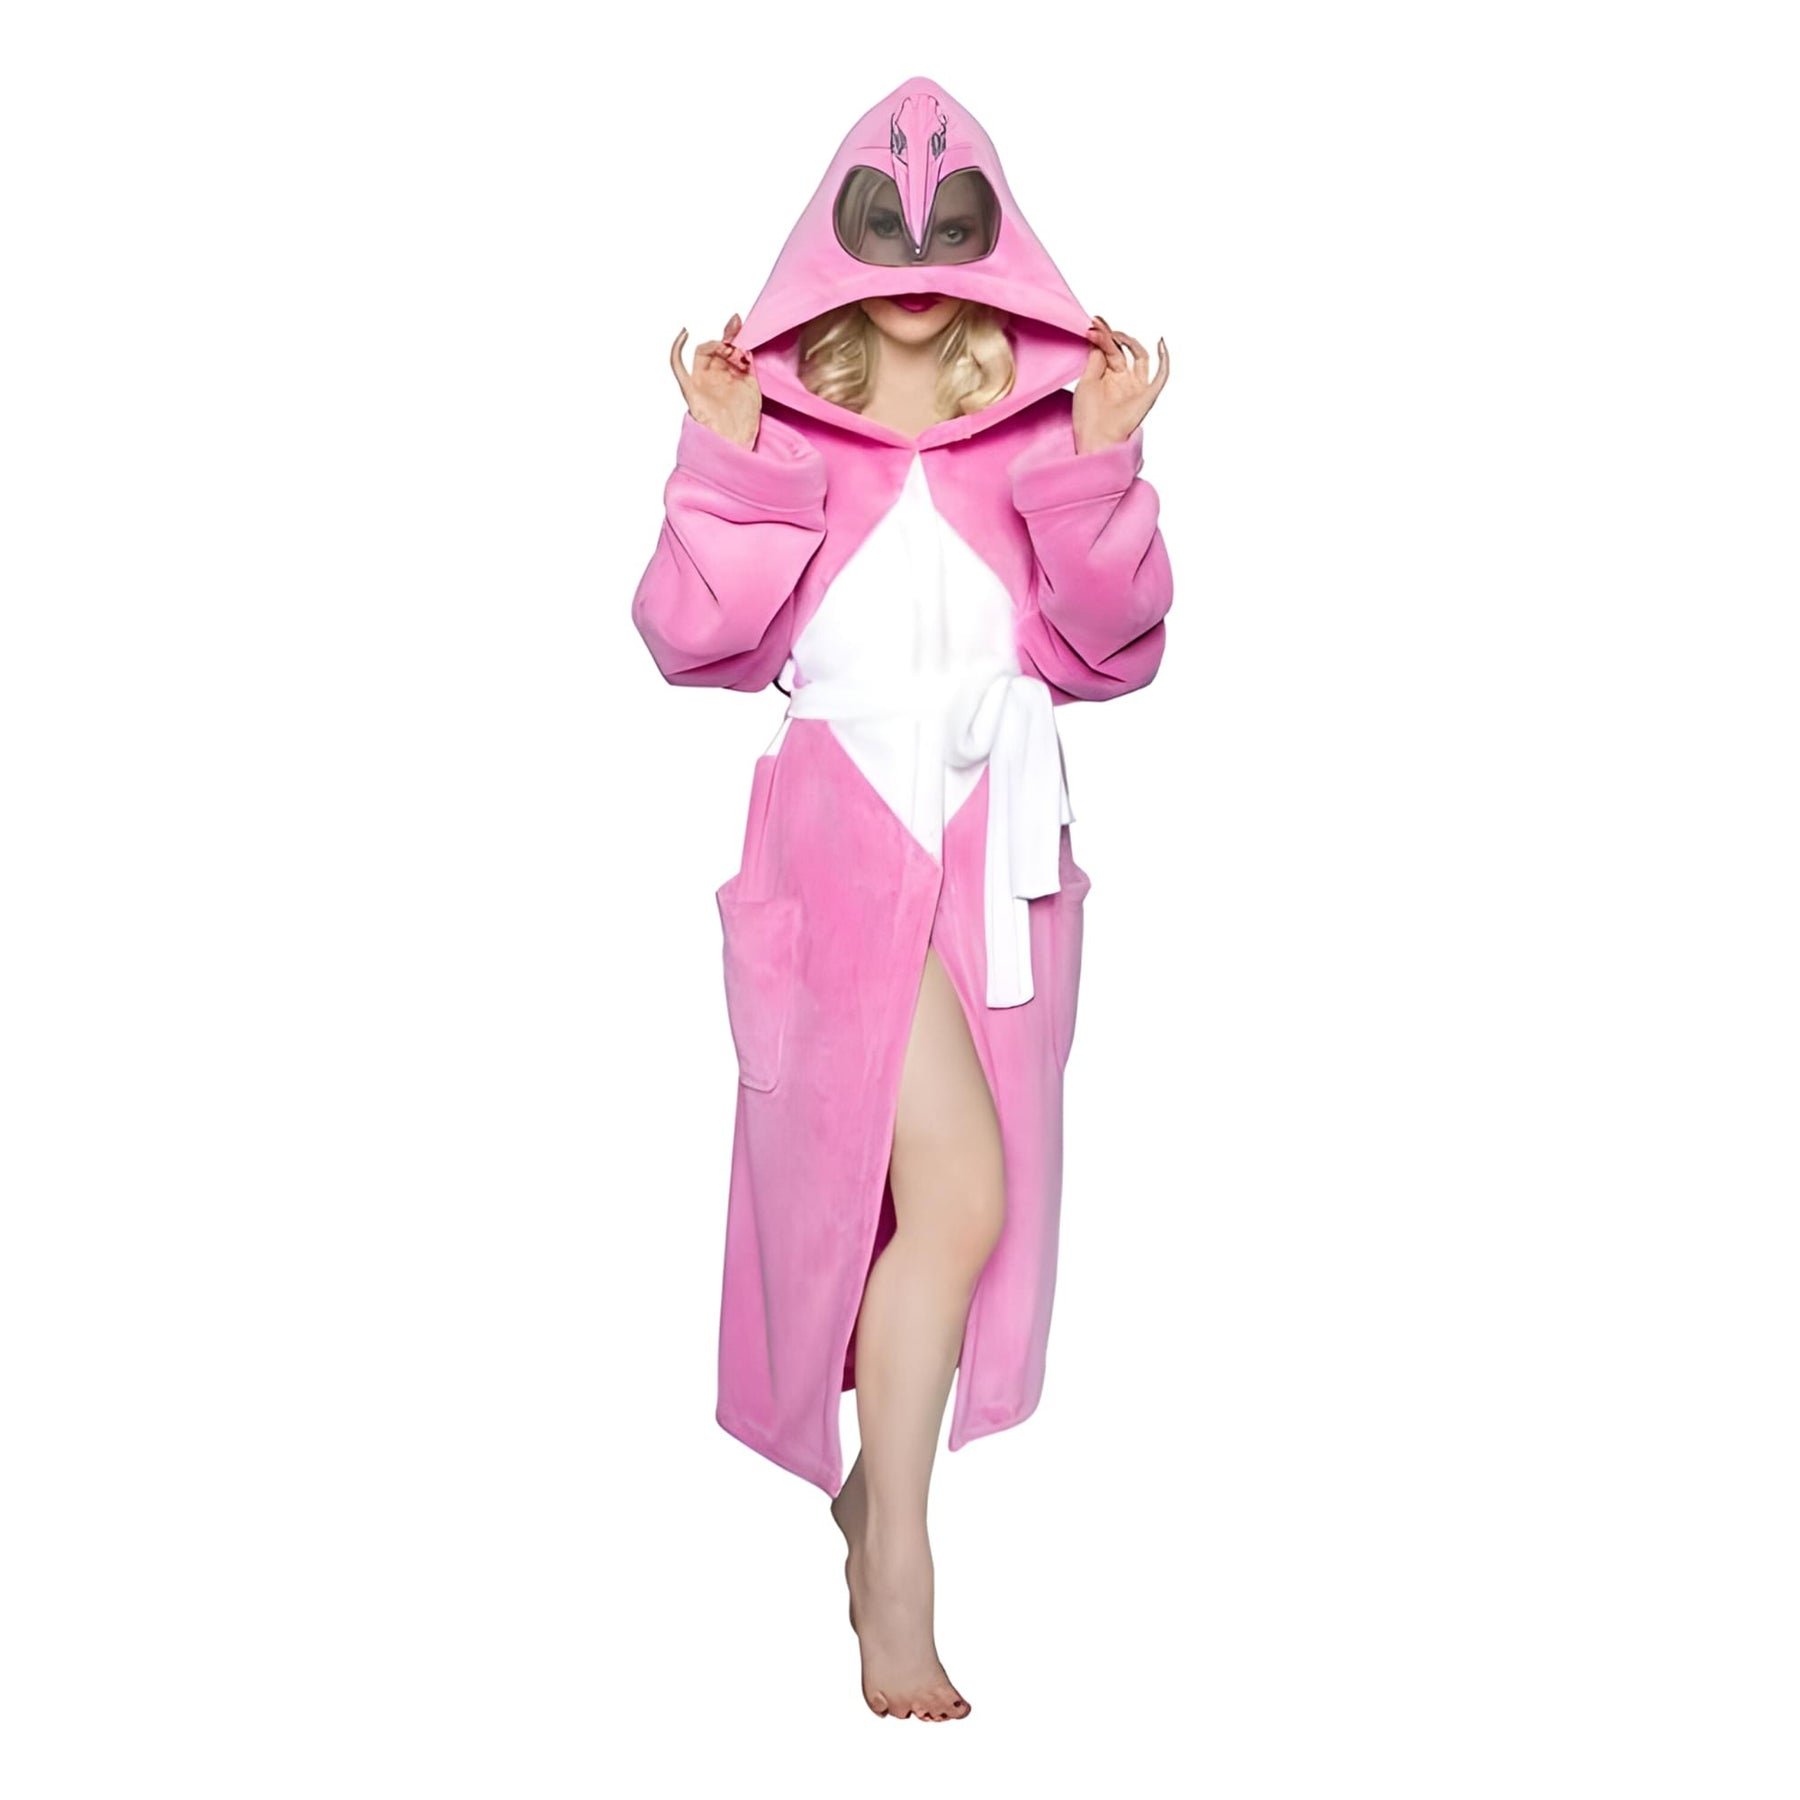 Power Rangers Adult Costume Robe, Pink